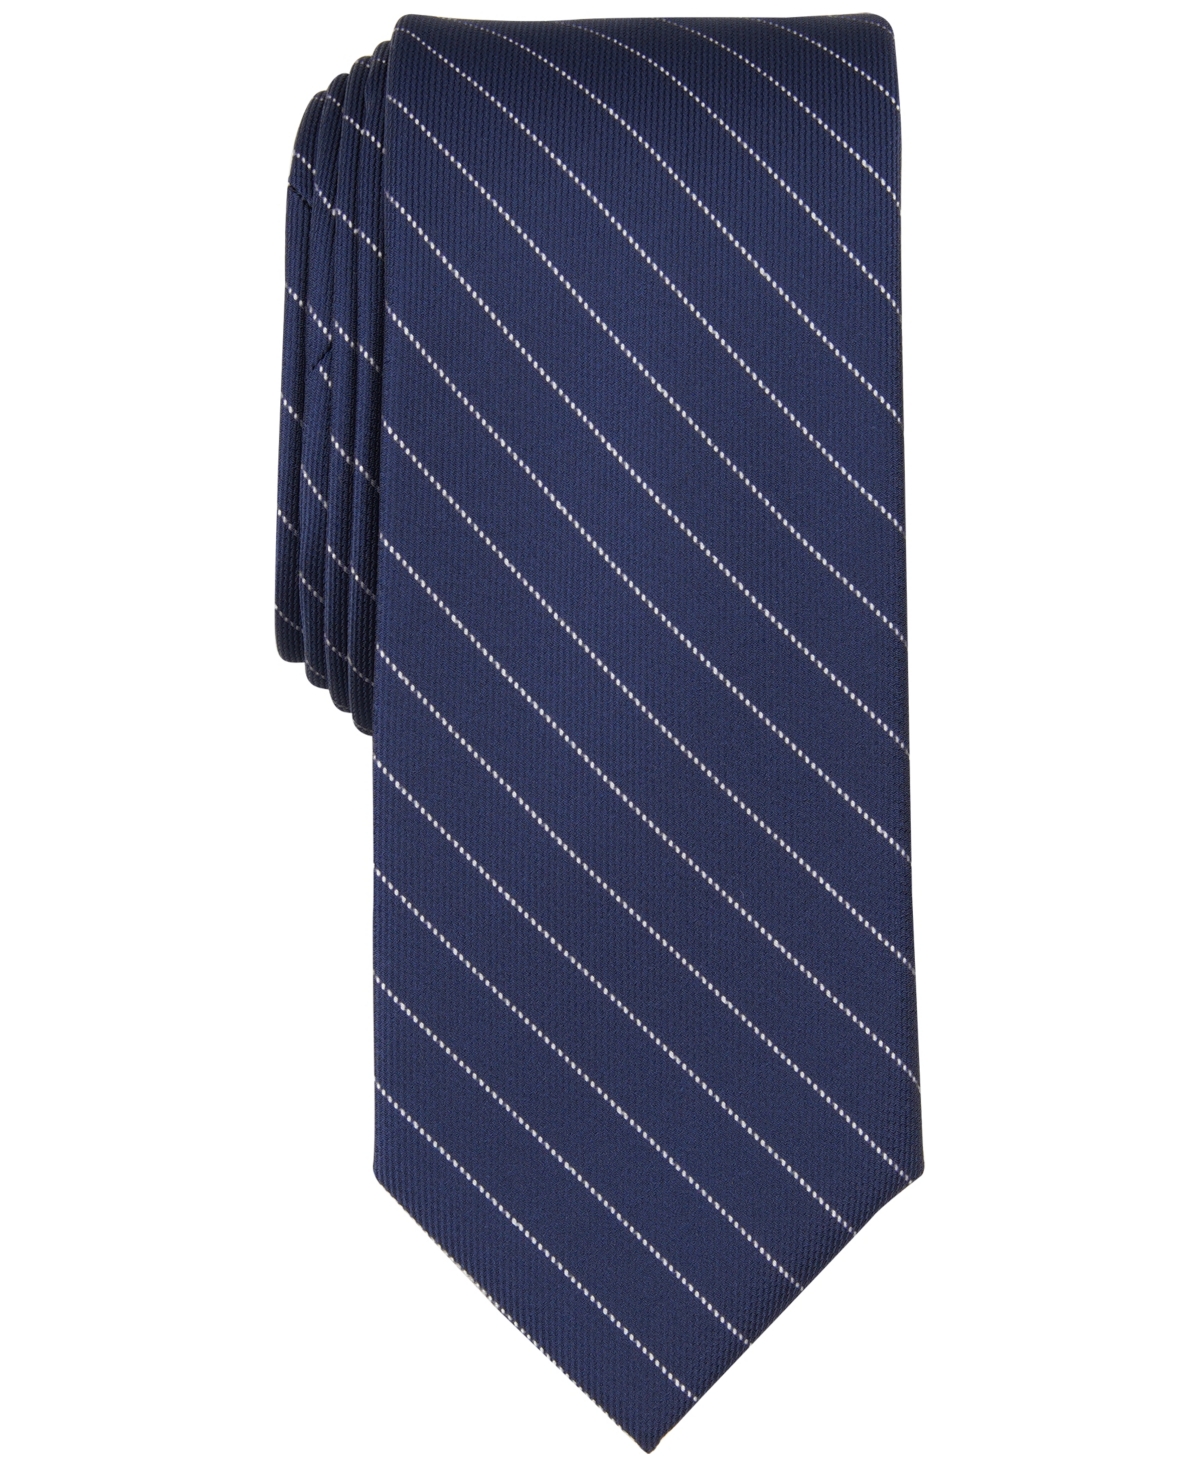 Men's Braly Stripe Tie, Created for Macy's - Navy